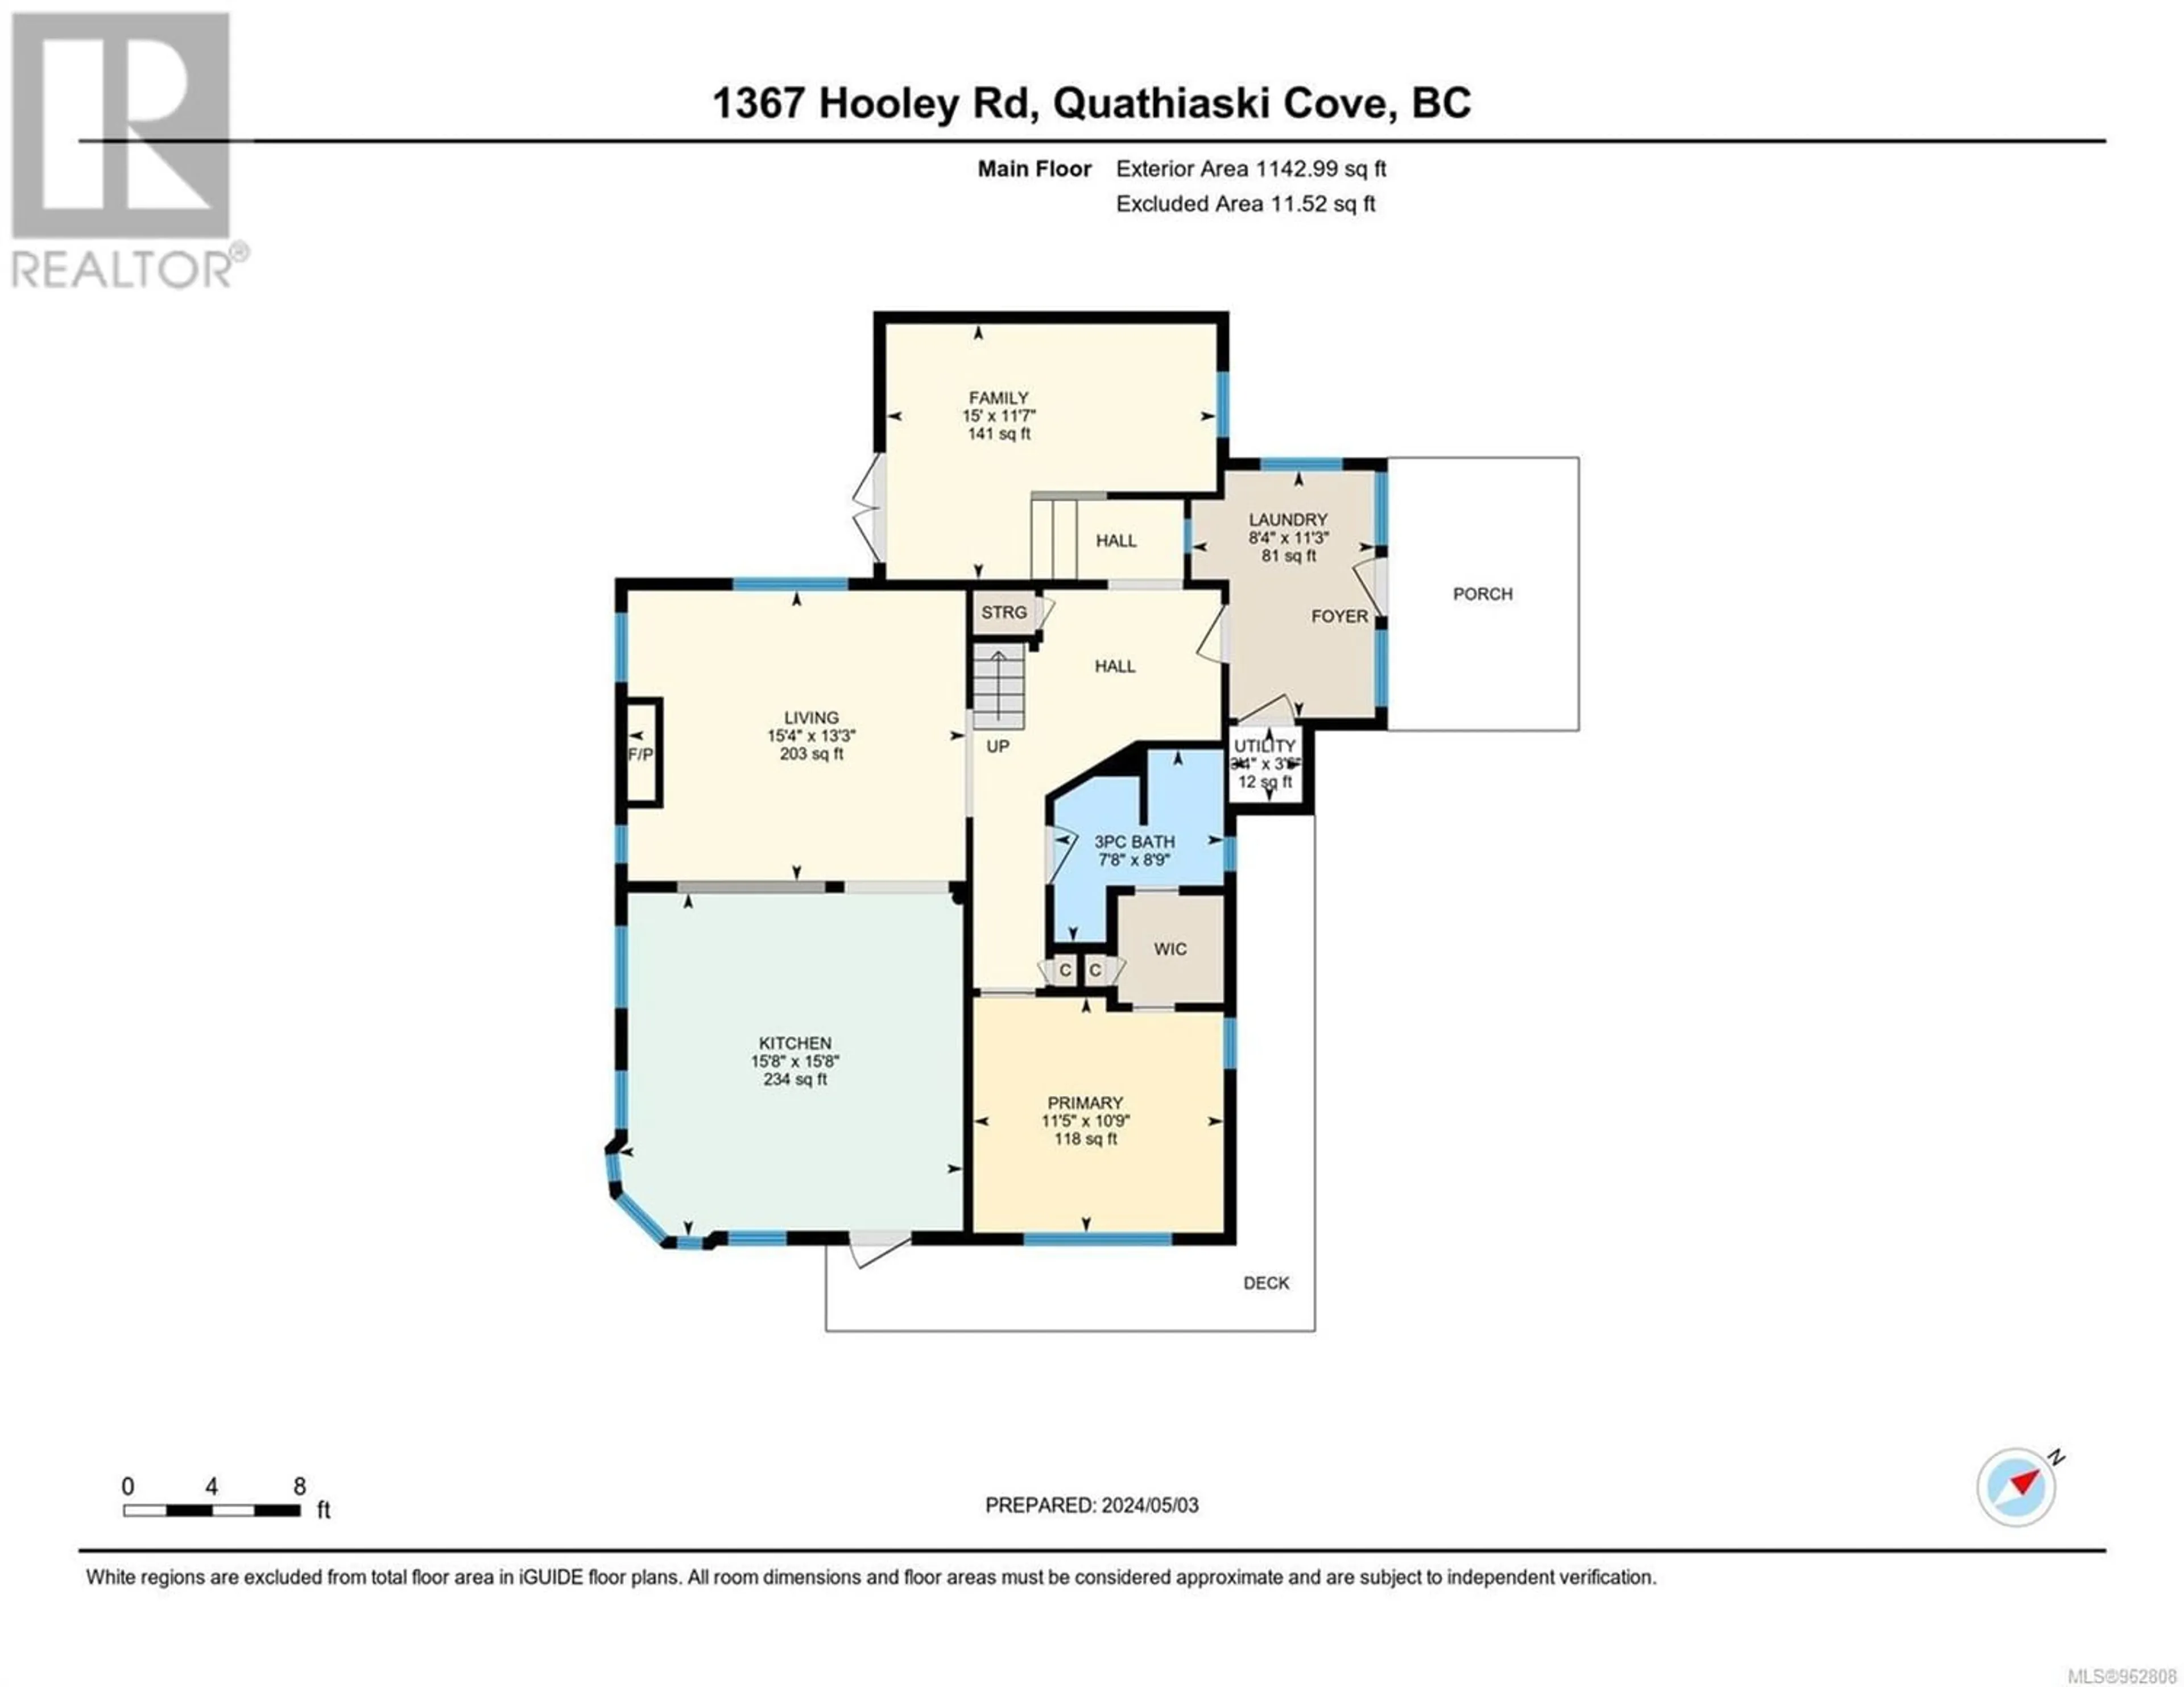 Floor plan for 1367 Hooley Rd, Quadra Island British Columbia V0P1H0